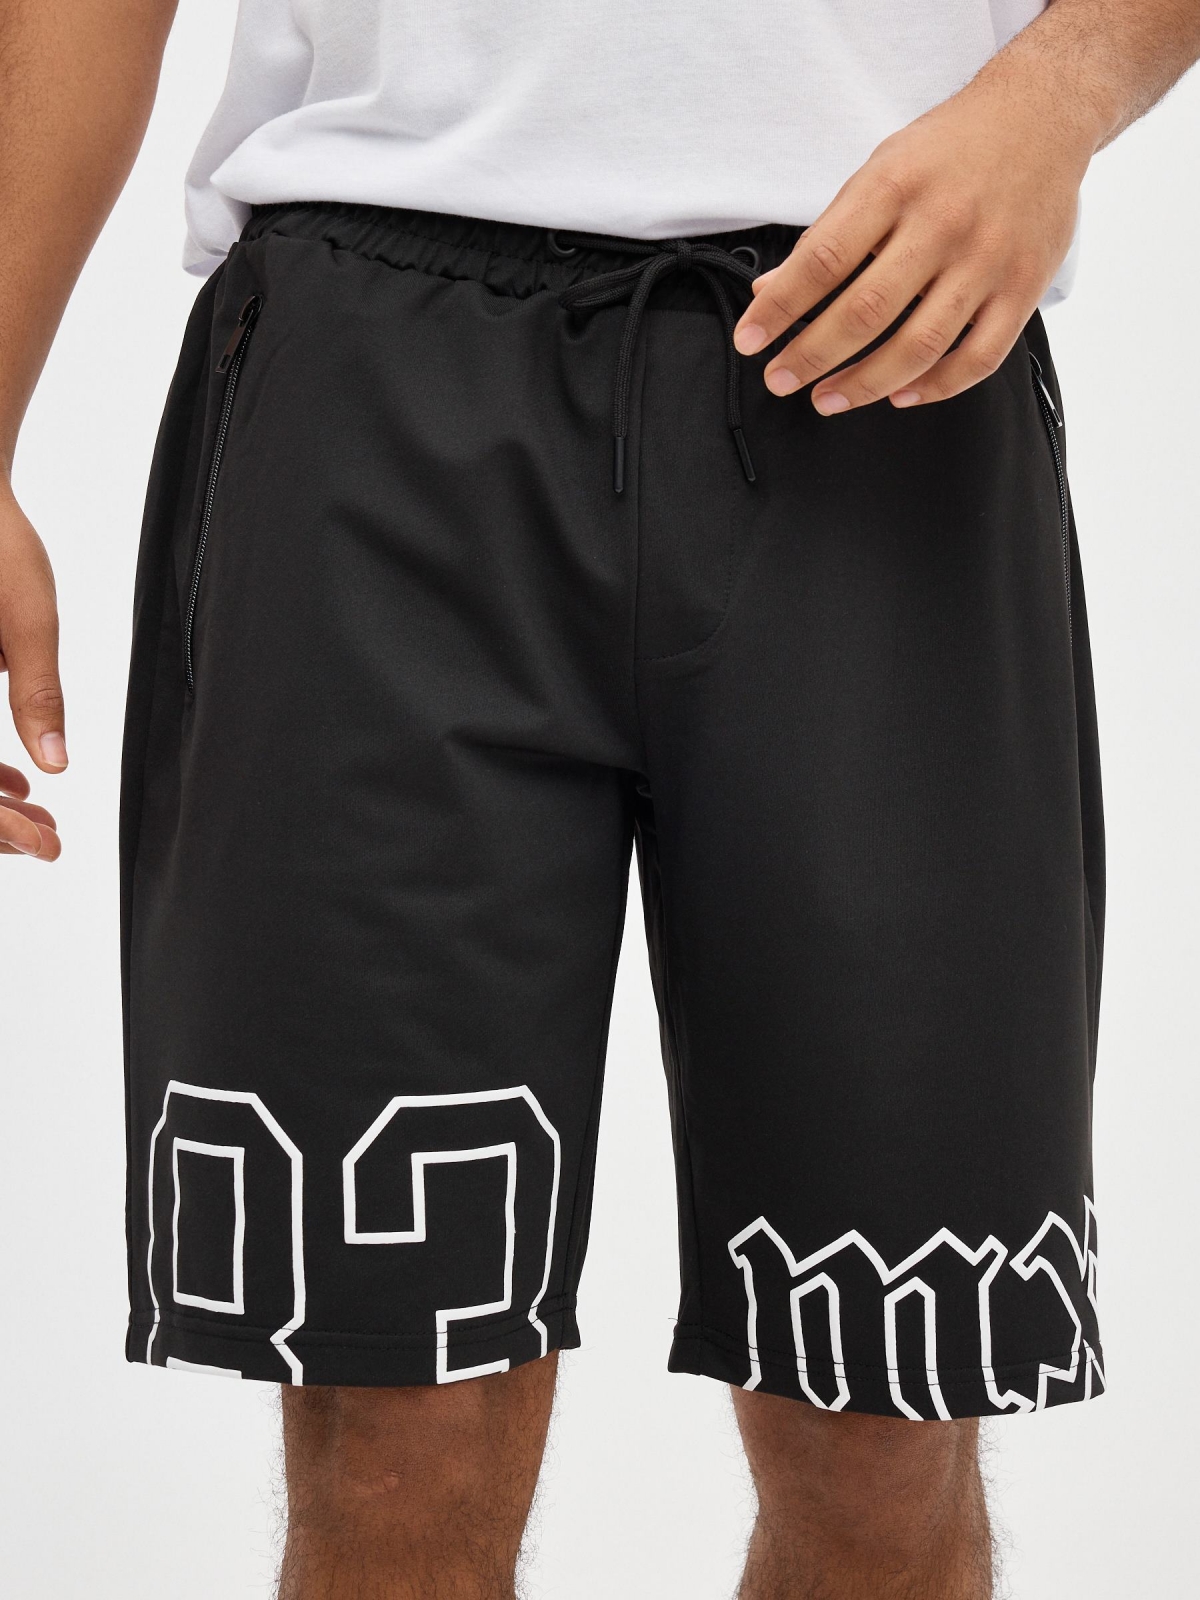 Printed Bermuda jogger shorts black detail view